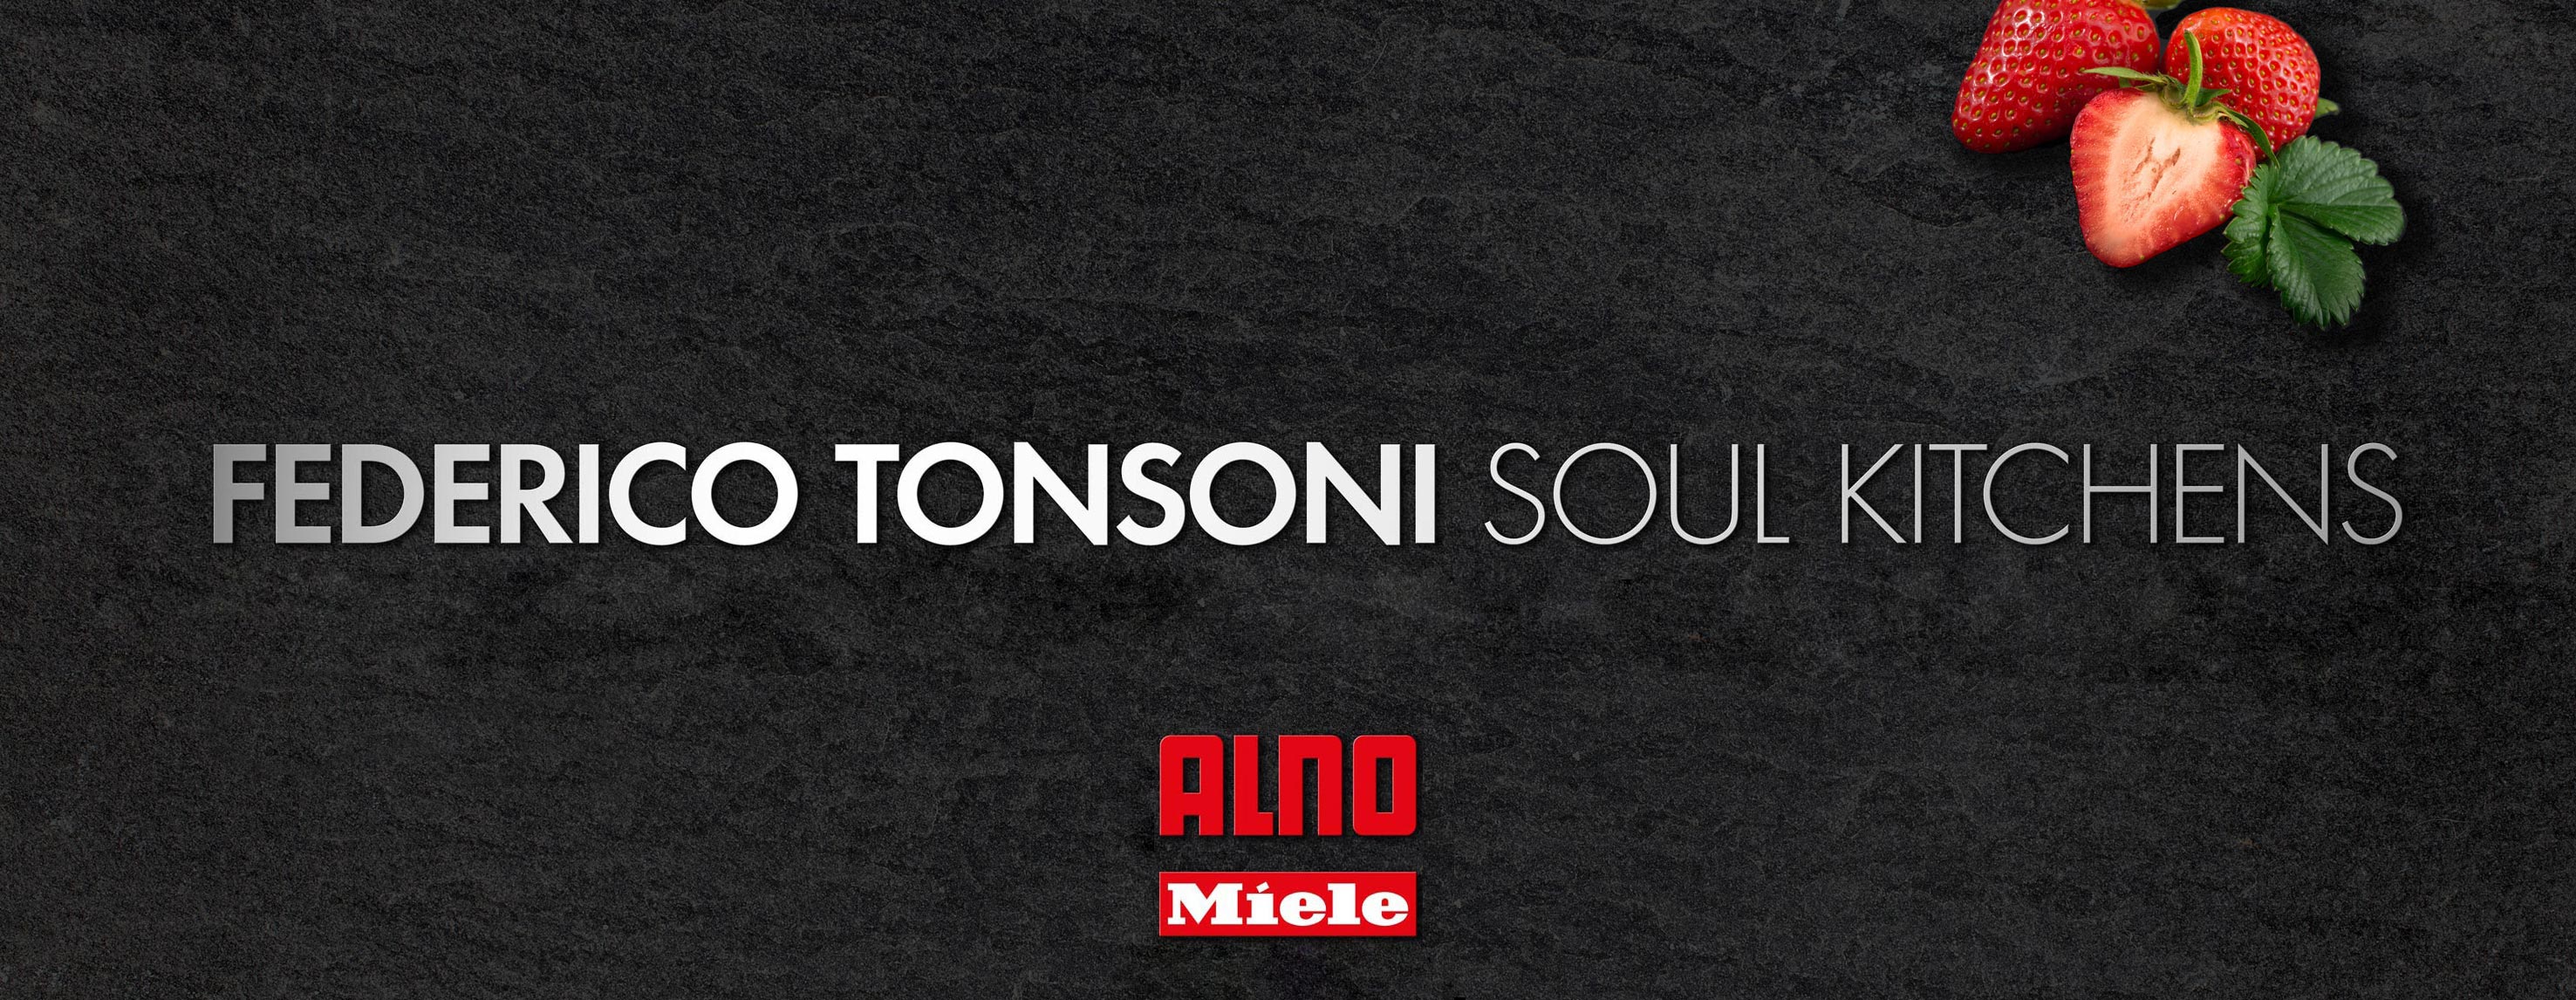 Federico Tonsoni Soul Kitchens